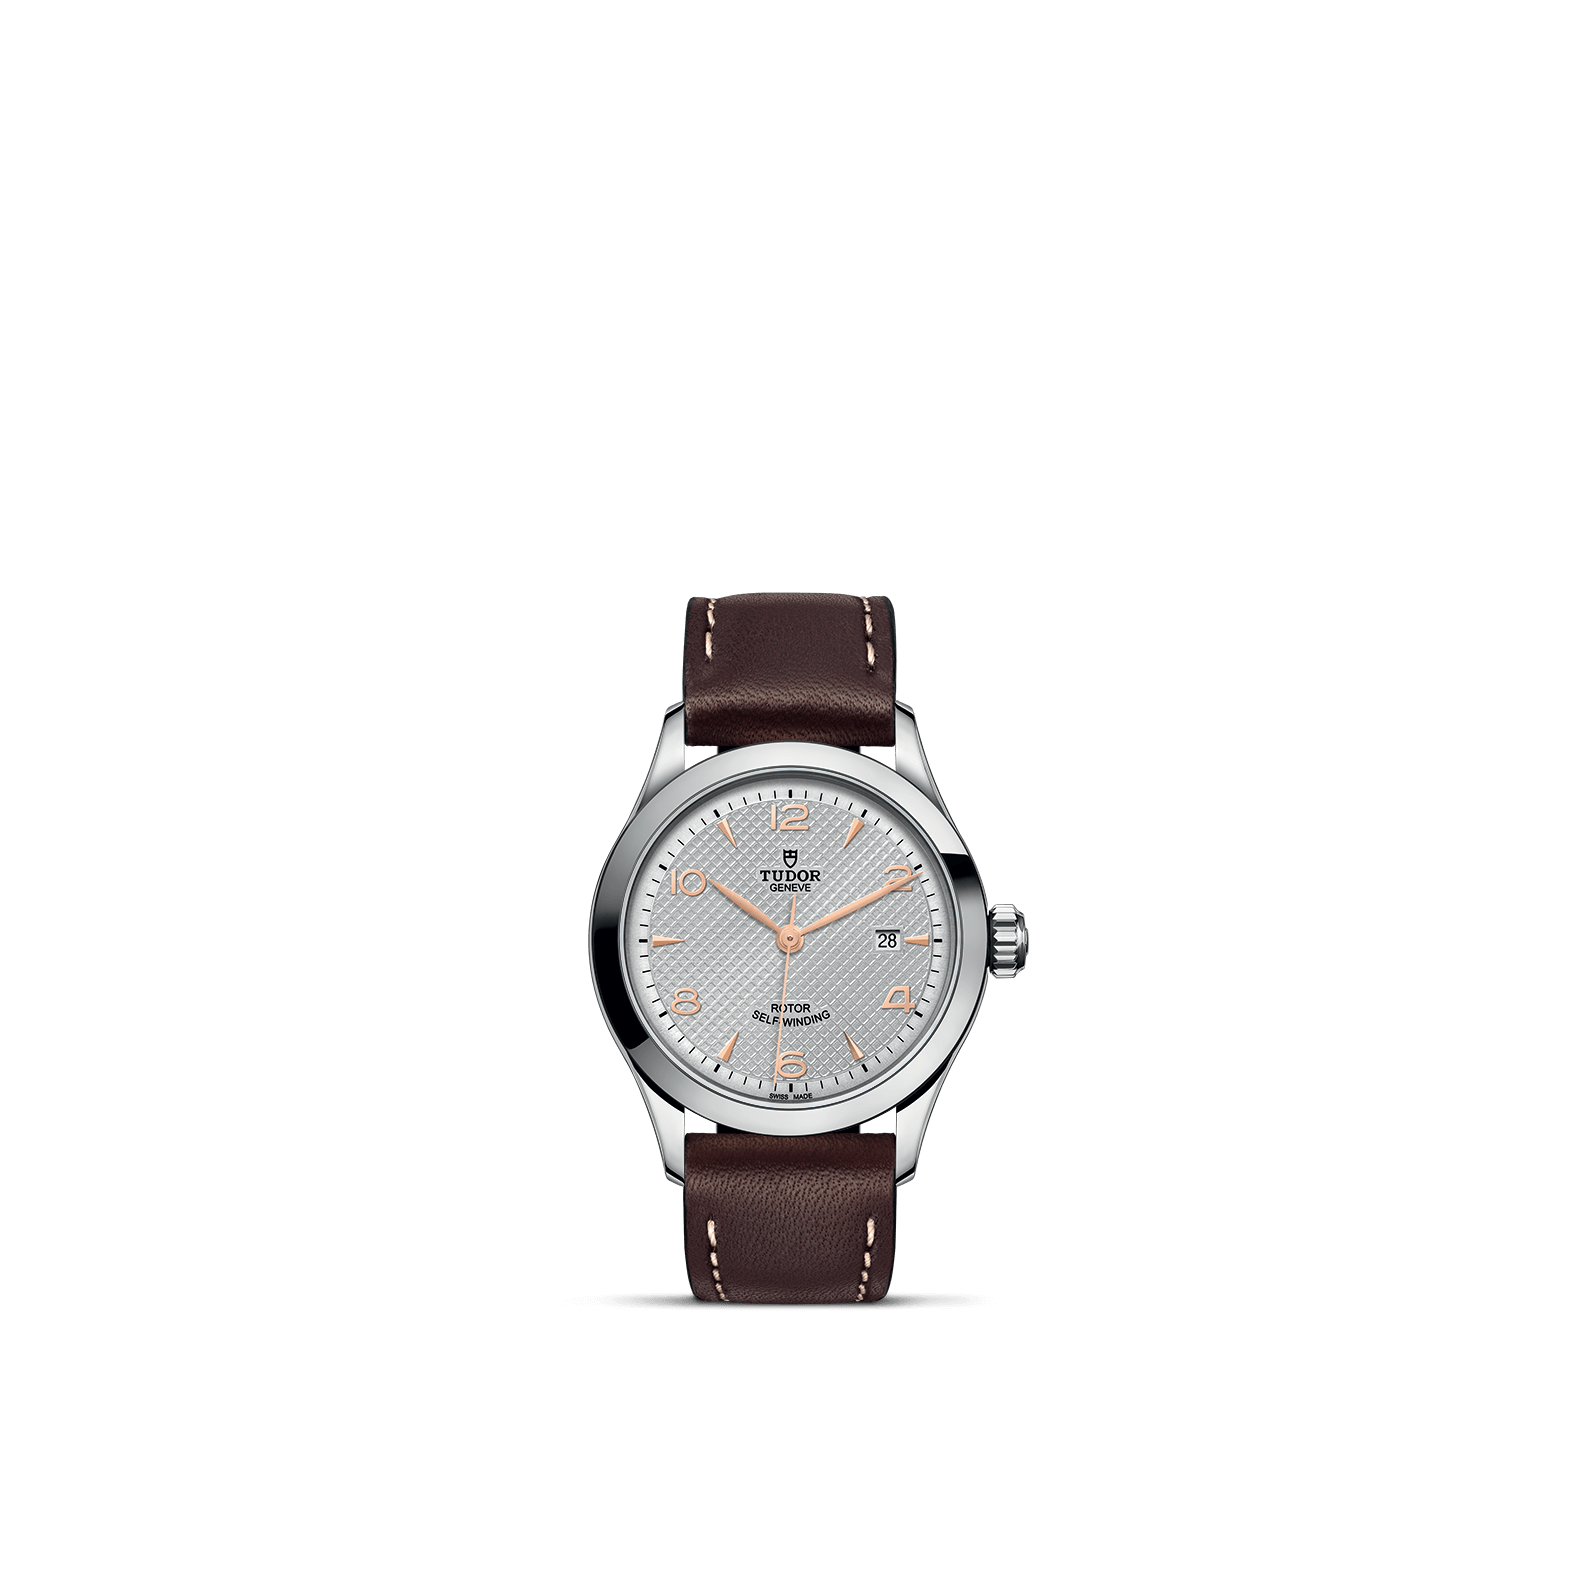 Tudor 1926 - M91350-0006 | Europe Watch Company